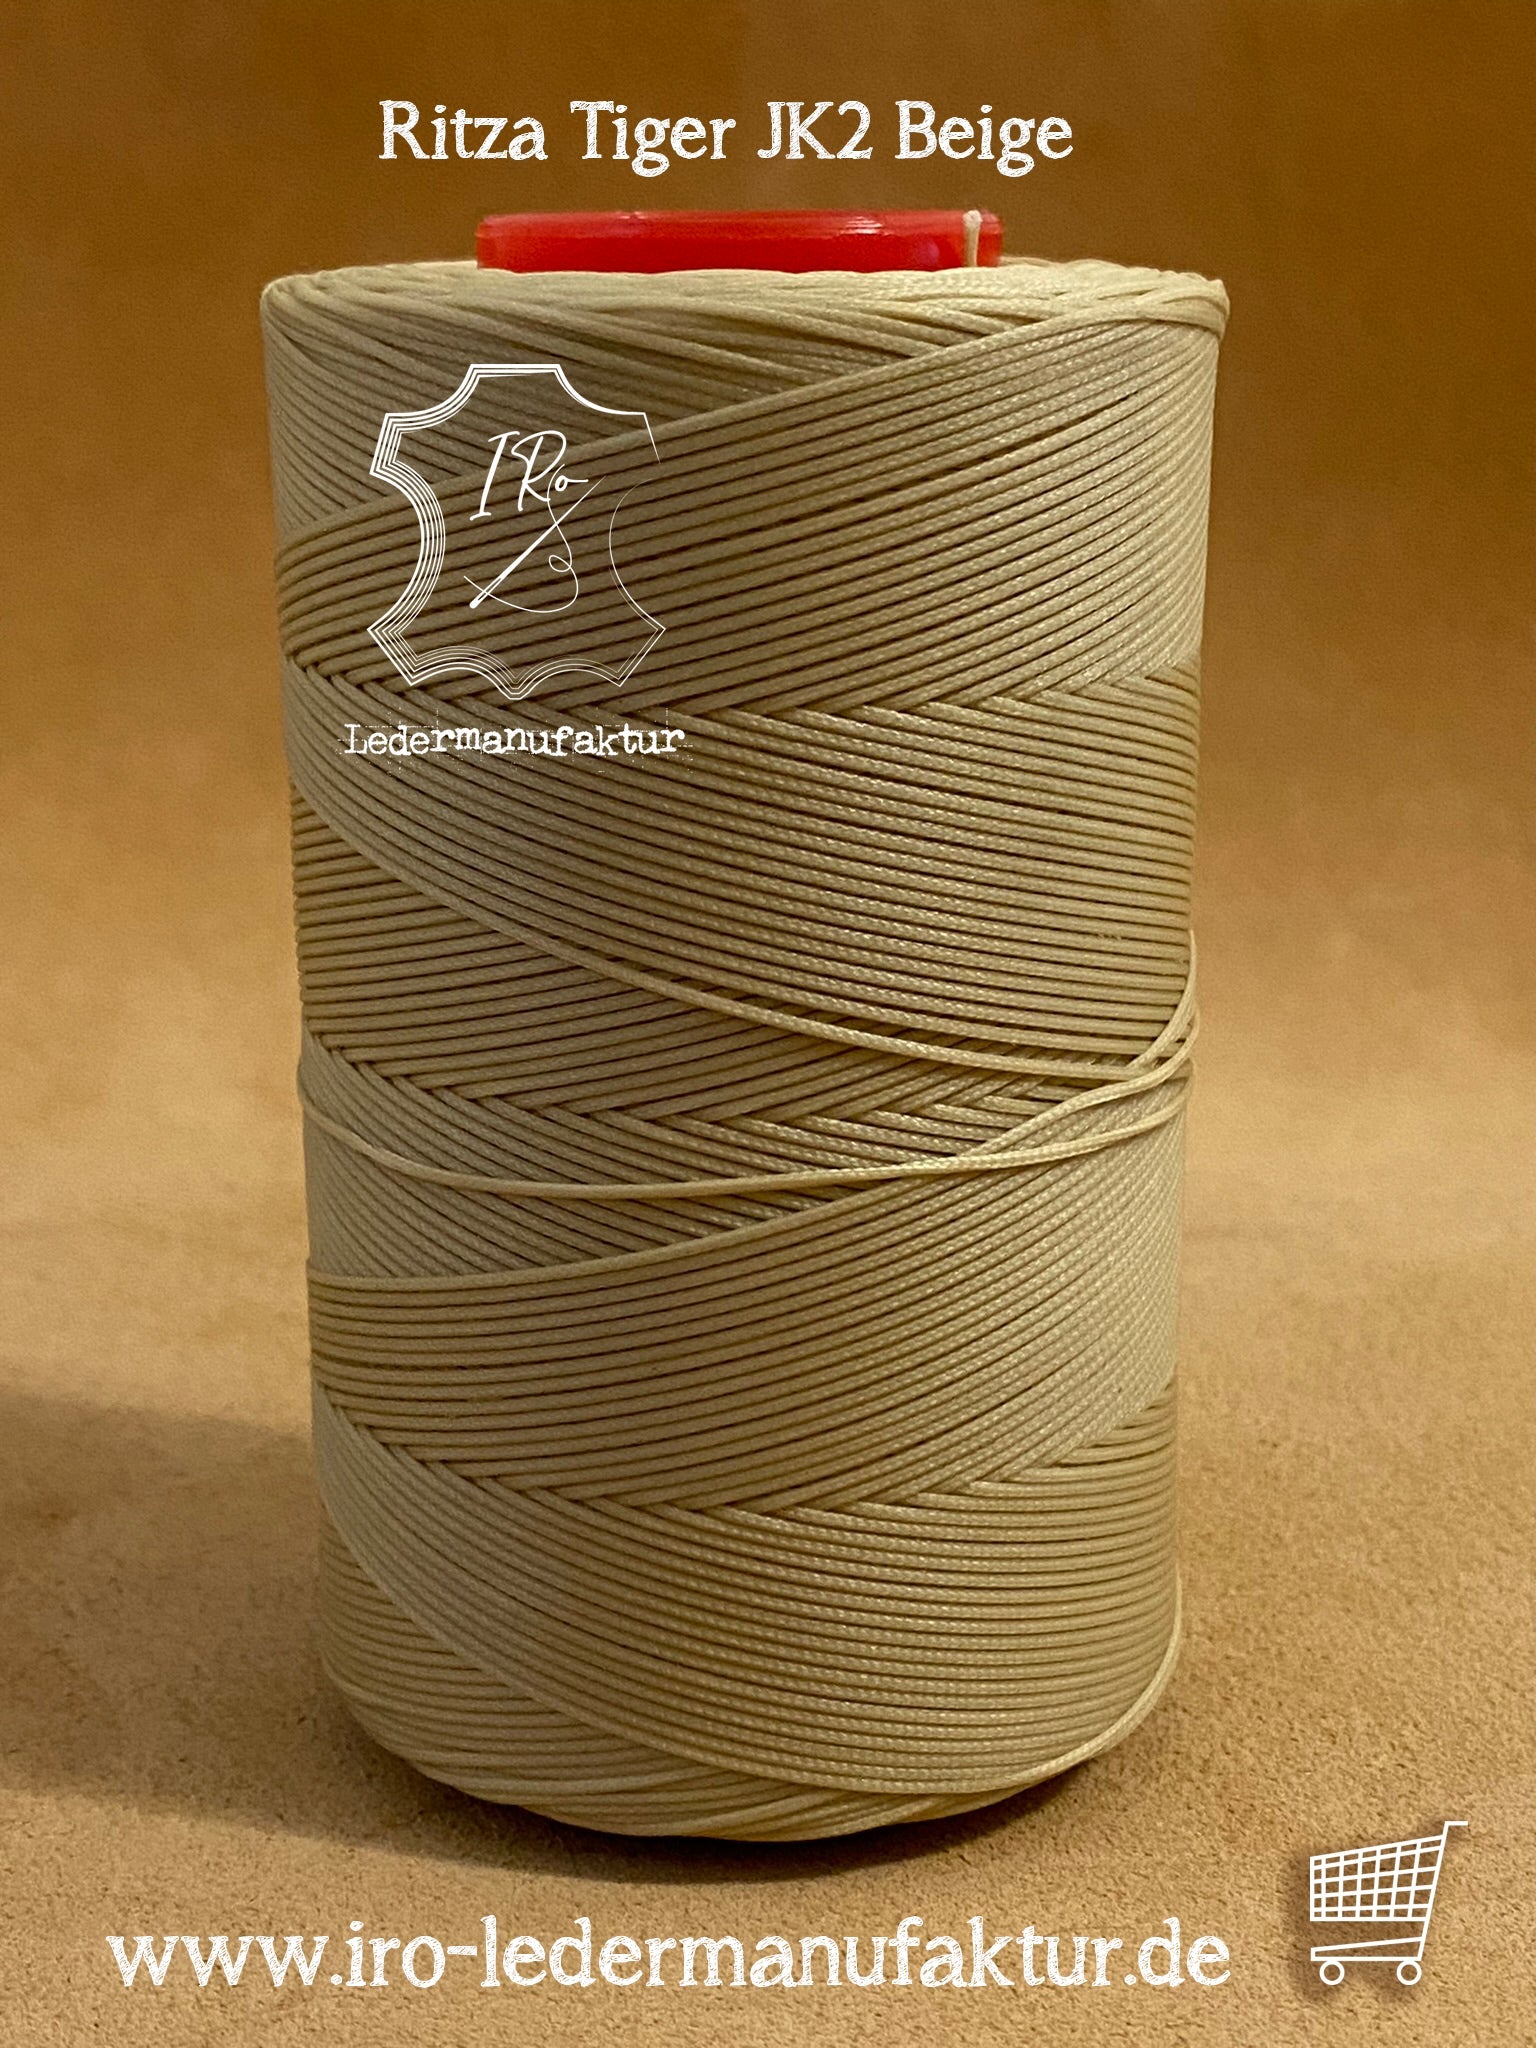 1.0mm Ritza Tiger Thread - Waxed Polyester Braided India